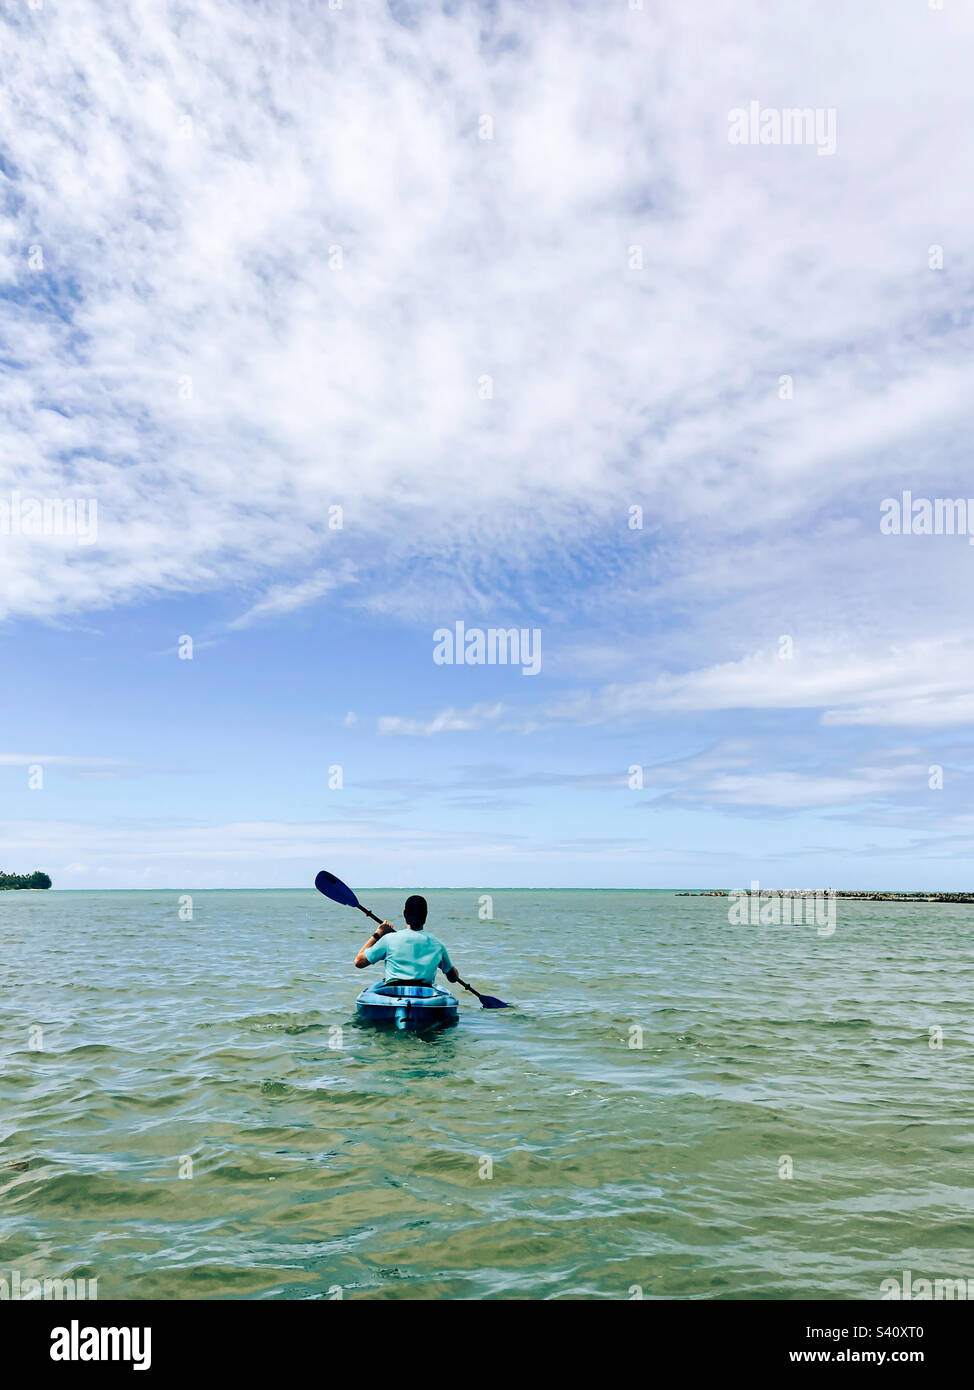 Young man kayaking in ocean Stock Photo